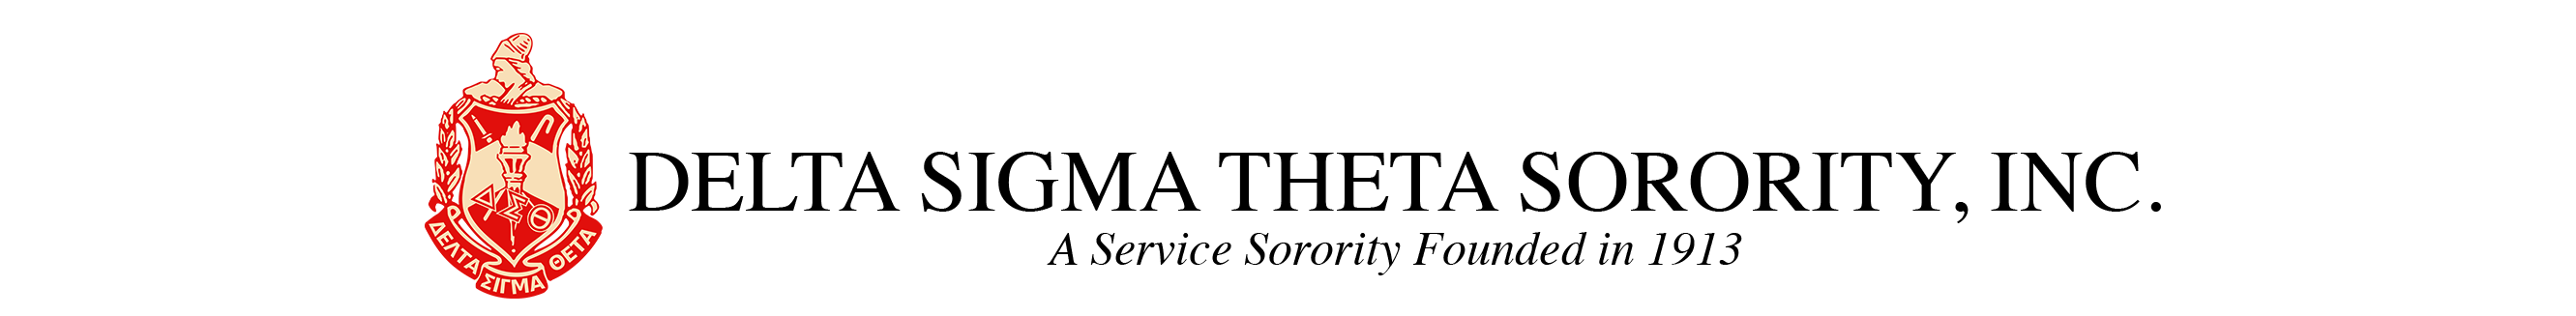 Black Sororities Logo - Delta Sigma Theta Sorority, Inc.